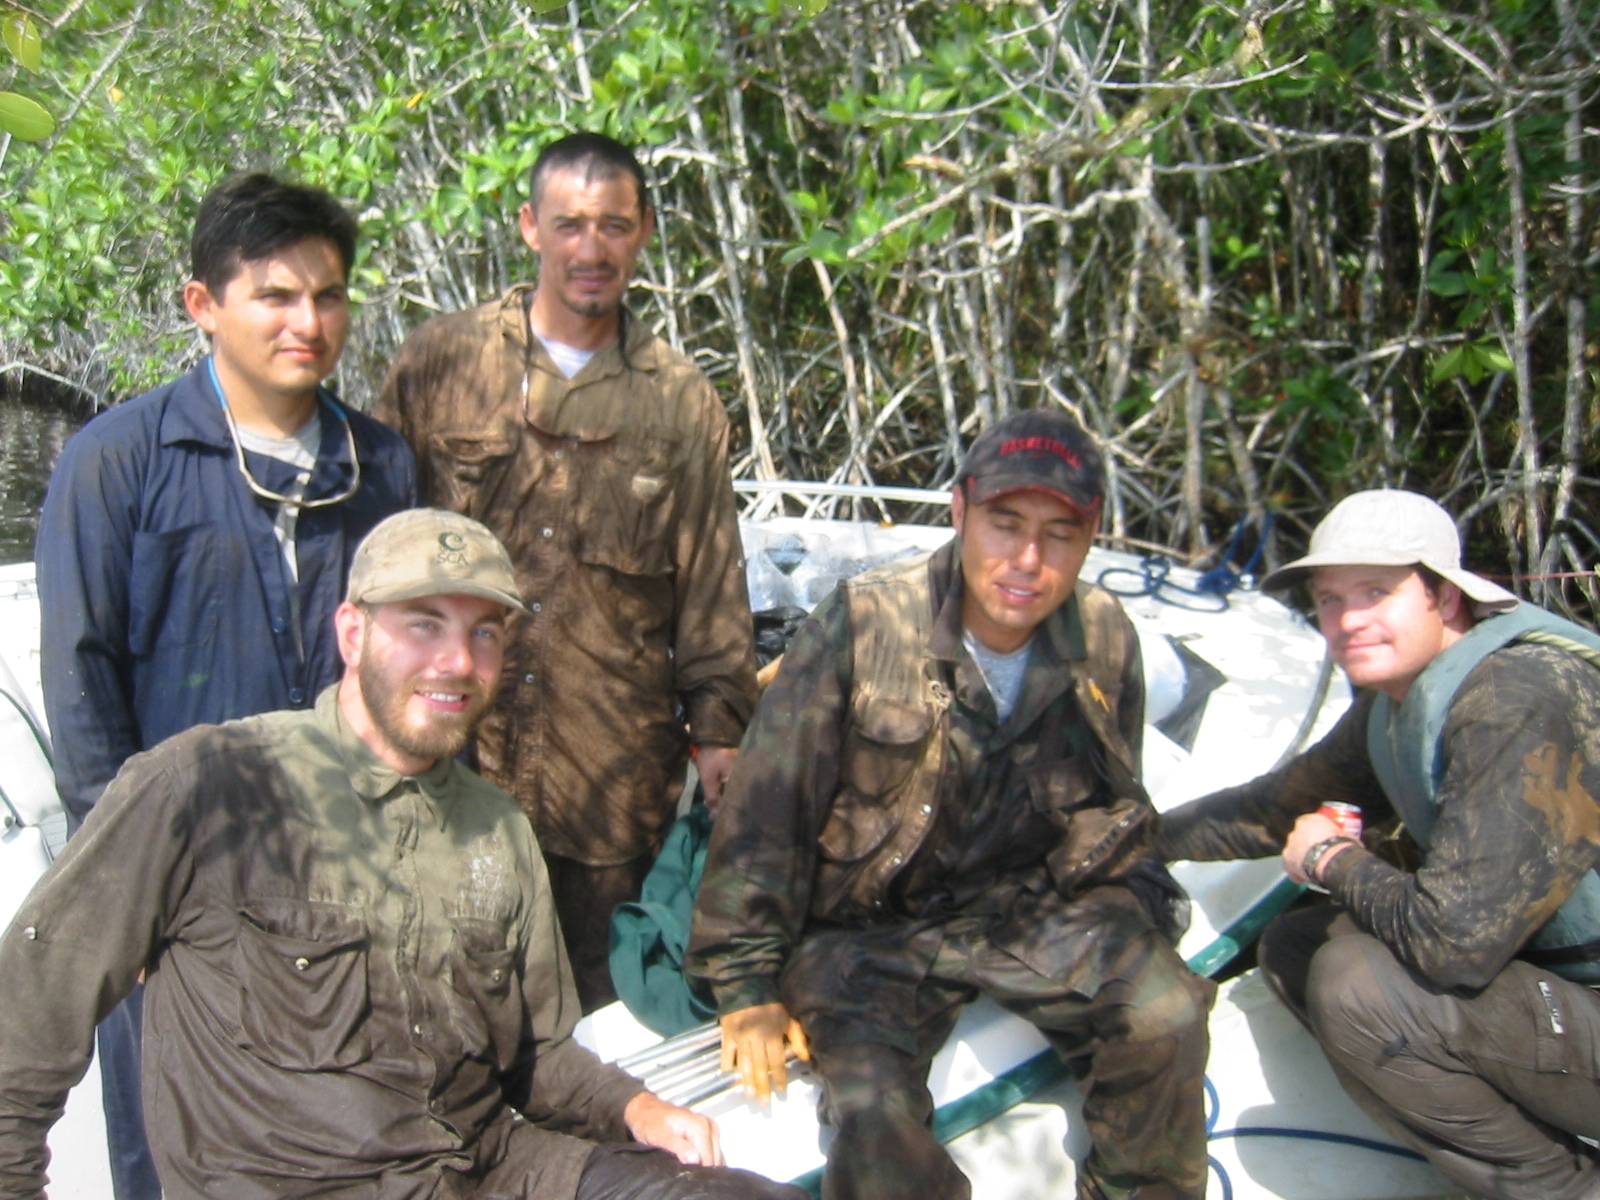 Left to right: Arturo Saldivar, Justin Baker, , Edward Castaneda, Dan Bond. Break after setting ingrowth root cores inside the mangrove forest at SRS-6 in Shark River Slough